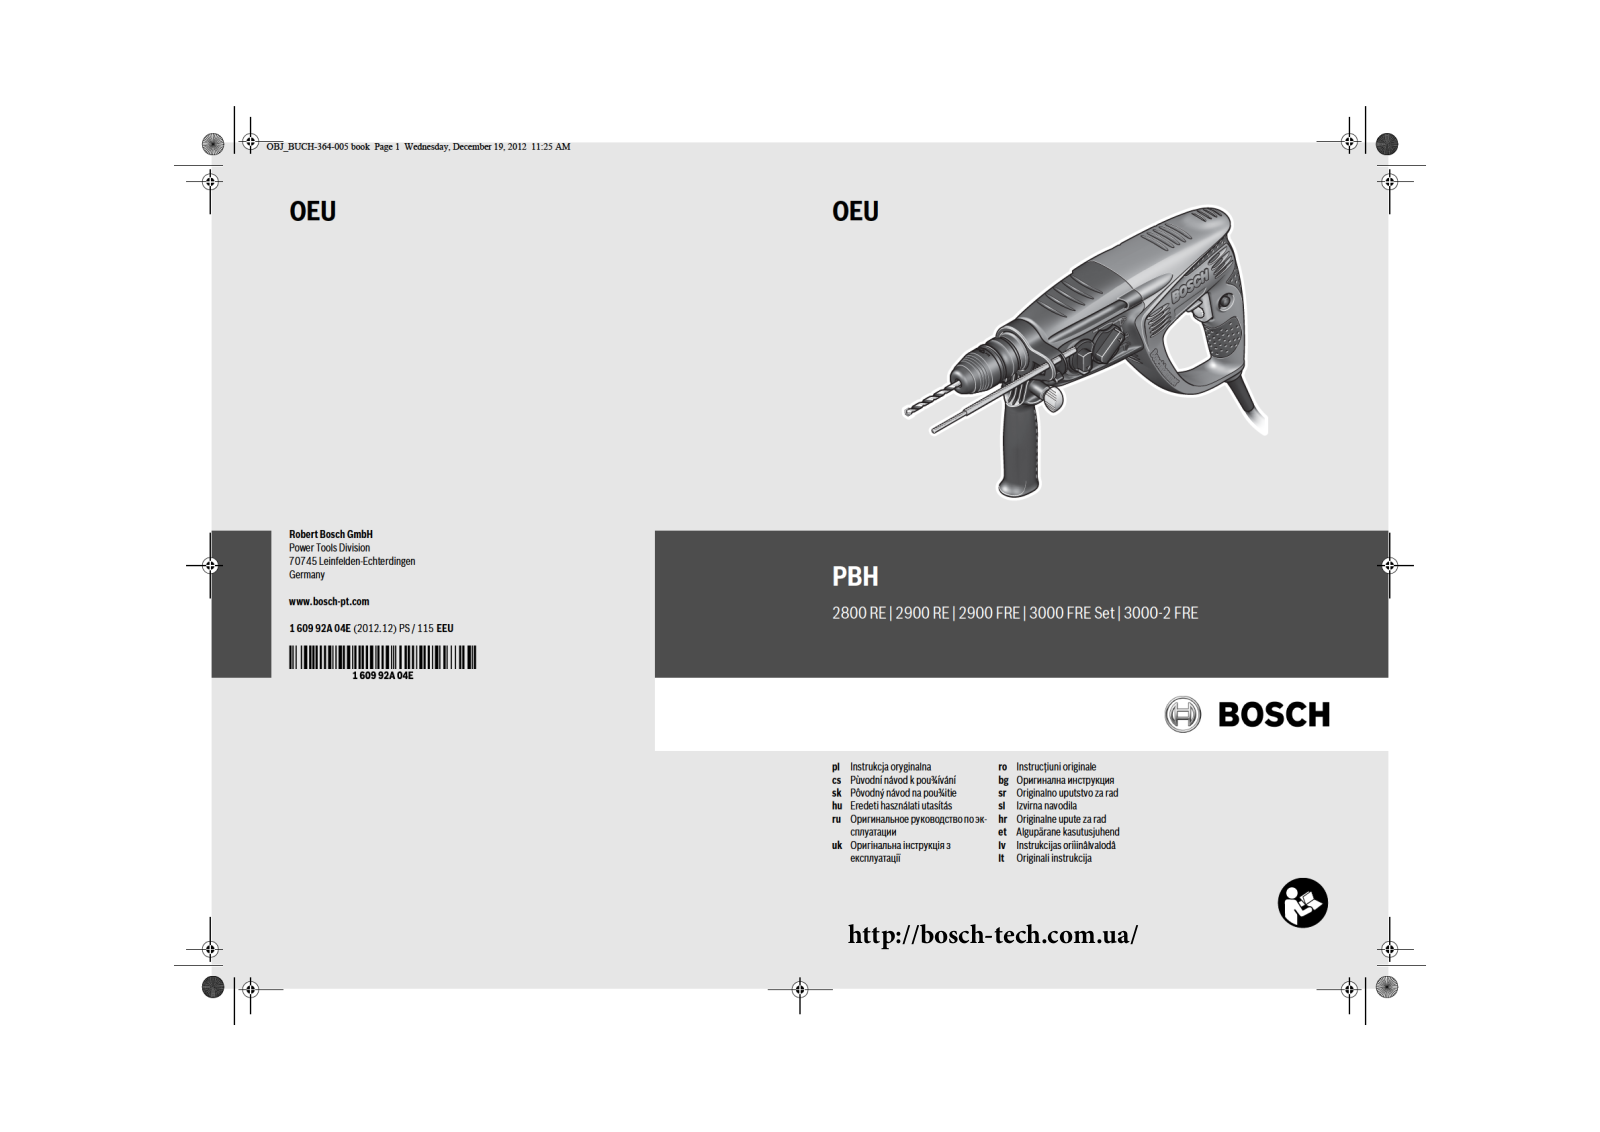 Bosch PBH 2900 RE User Manual